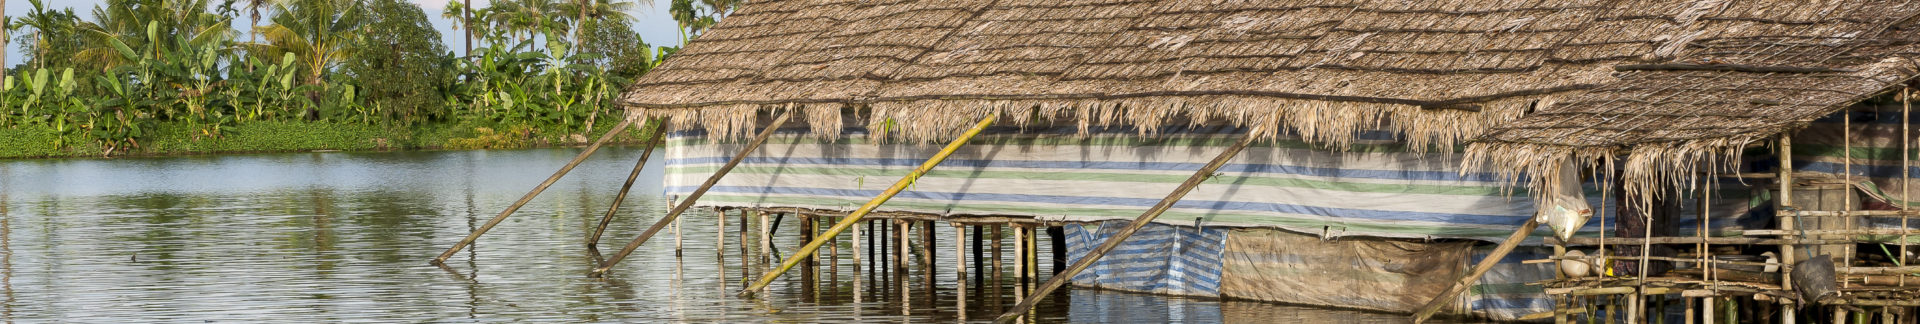 Supporting Flood-Based Farming Systems (FBFS) in the Ayeyerwady Delta